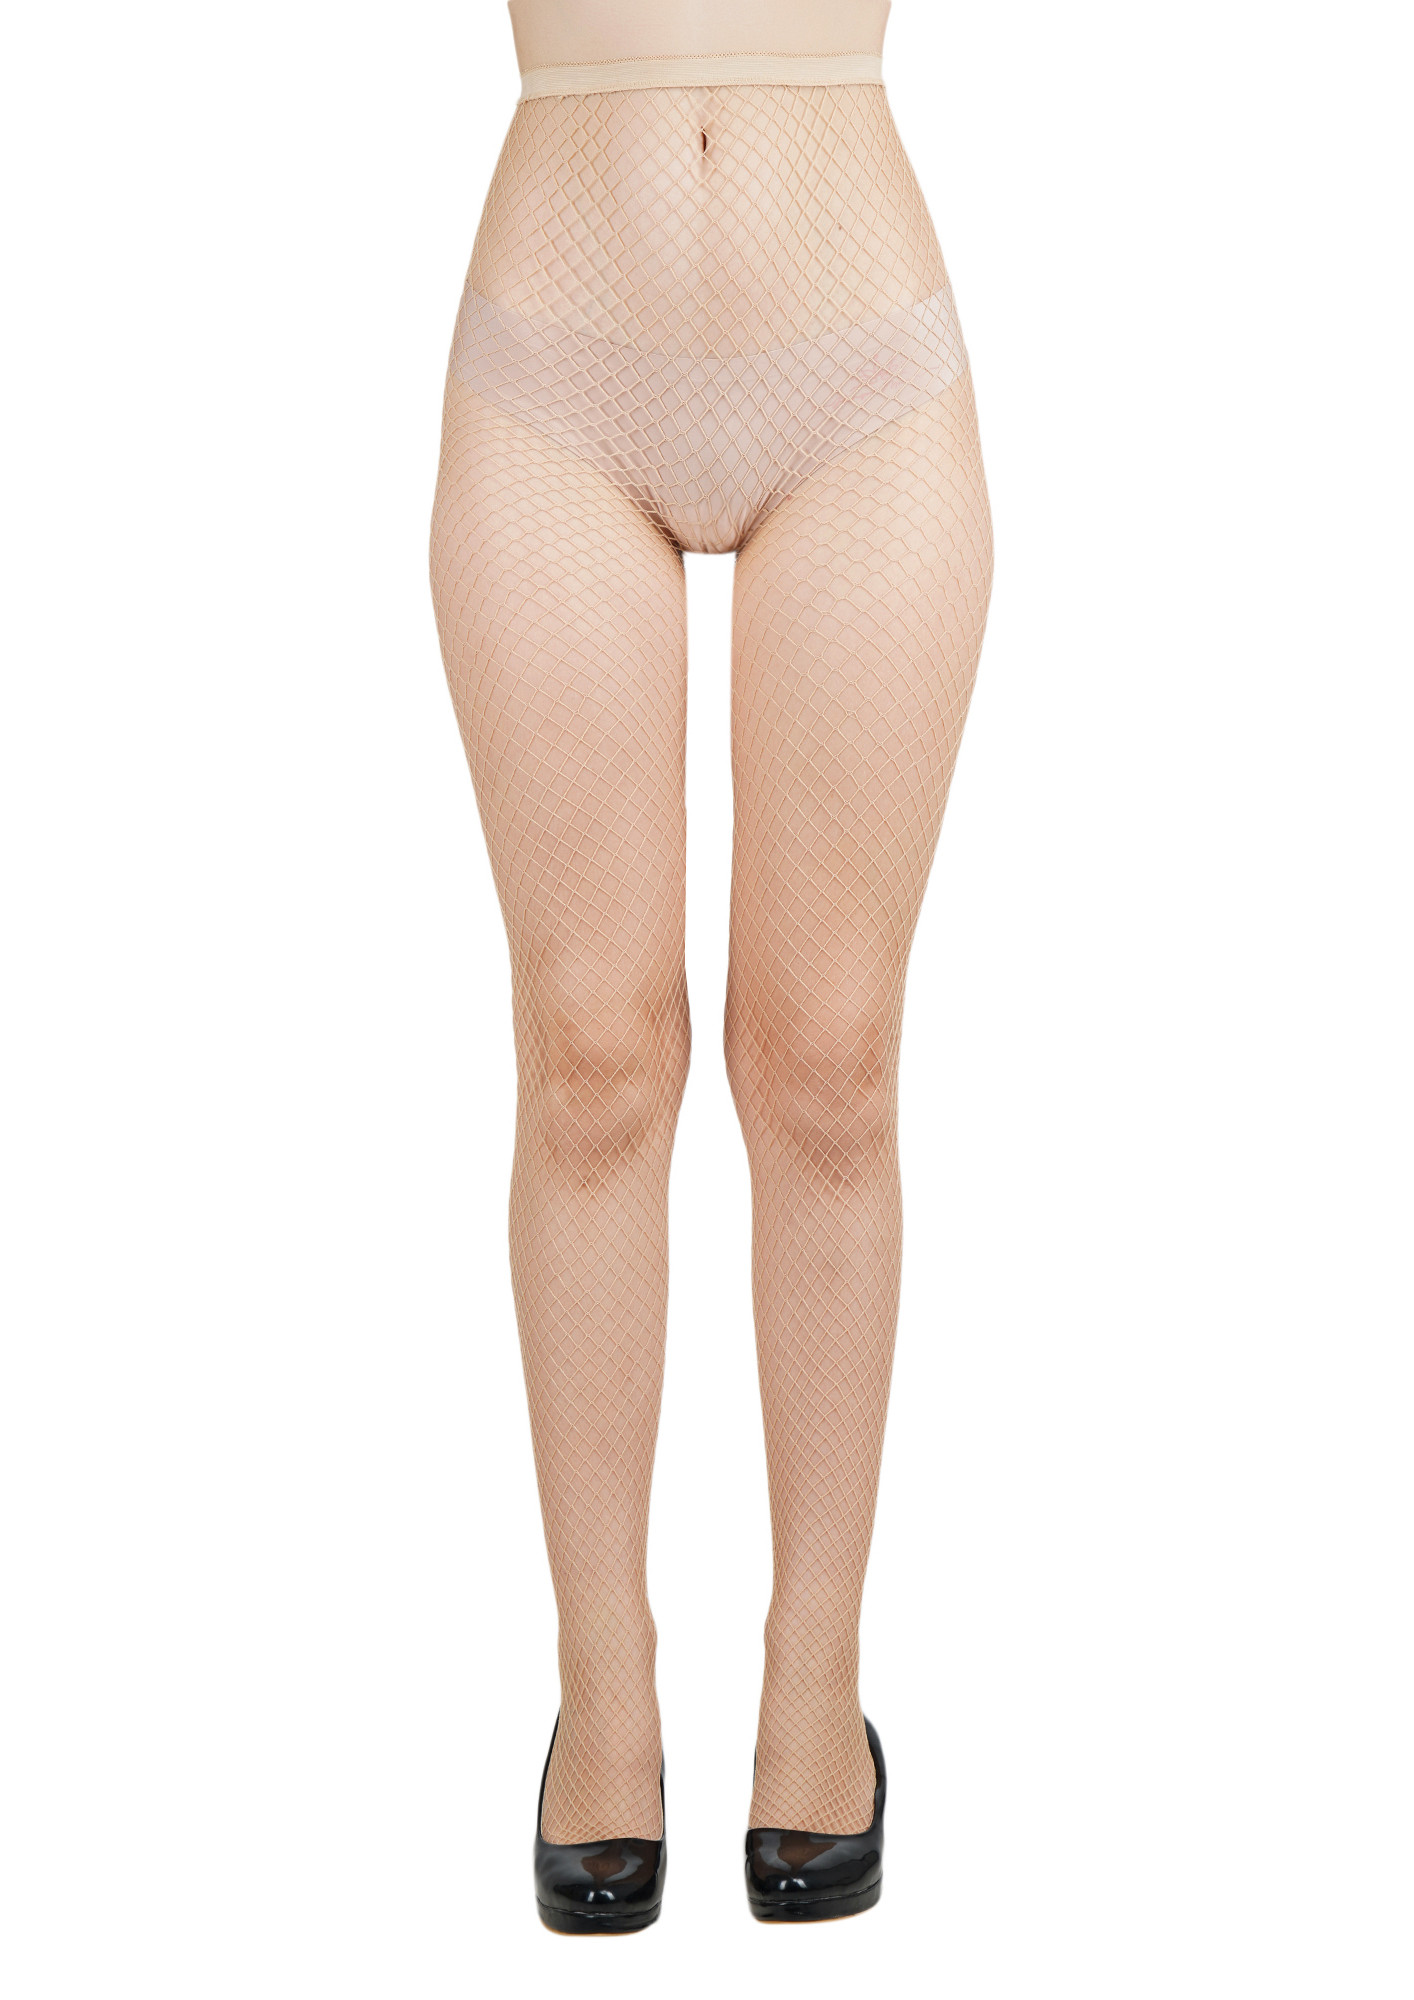 Women's Plus-Size Plus Fishnet Pantyhose, Red, Plus Size - Walmart.com